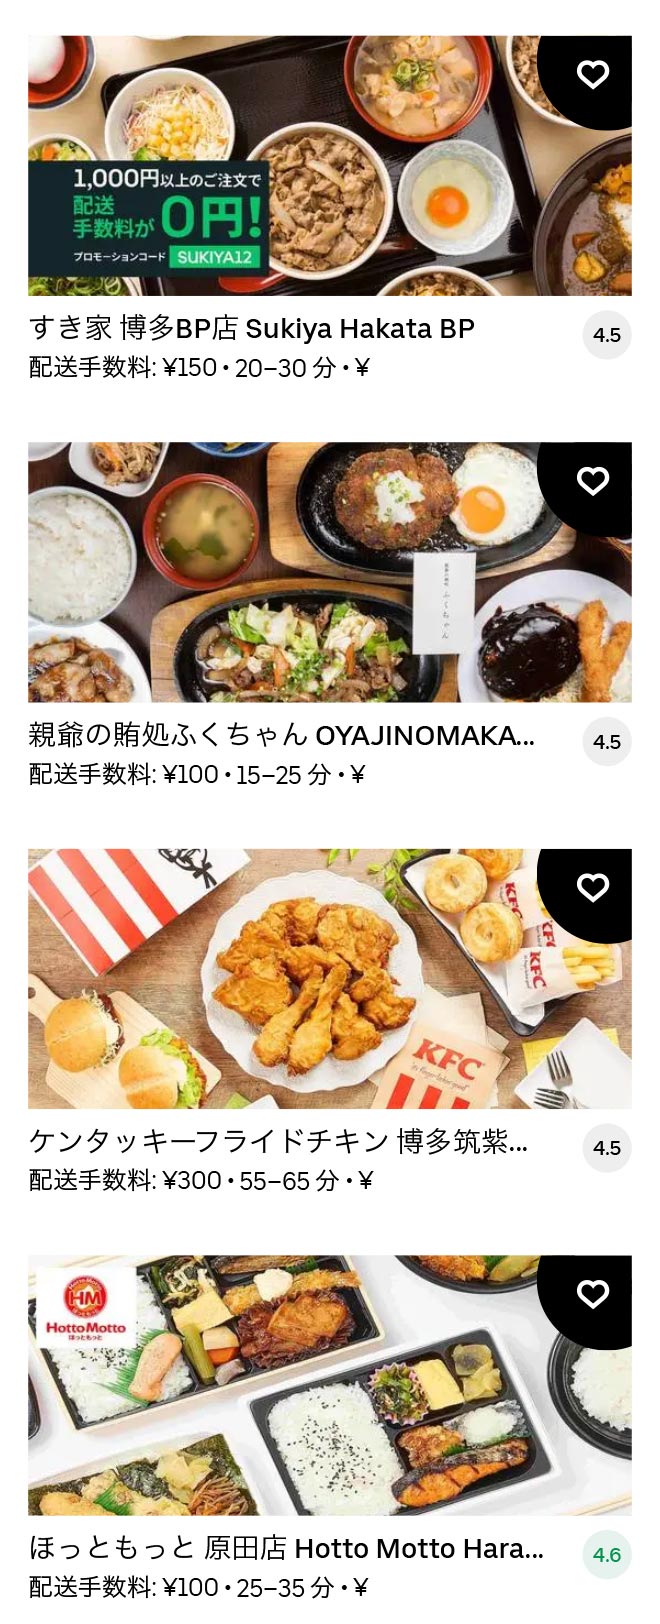 Hakozaki menu 2101 02